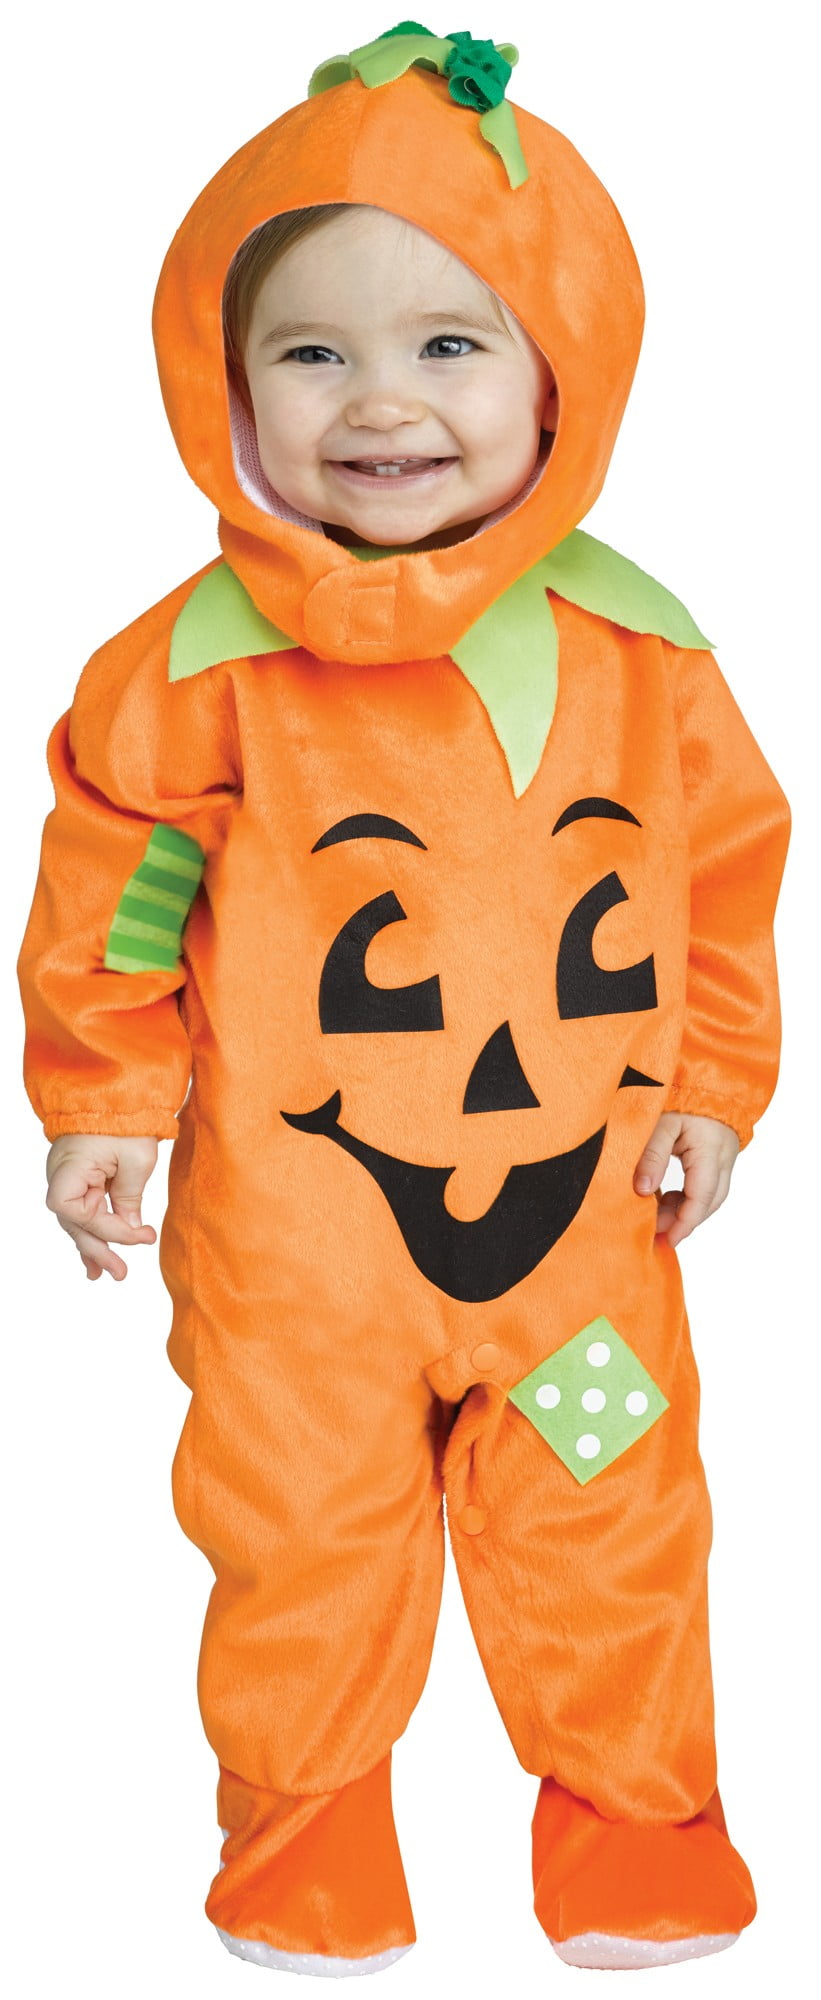 Infant Pumpkin Patch Baby Costume by FunWorld 8682 - Walmart.com ...